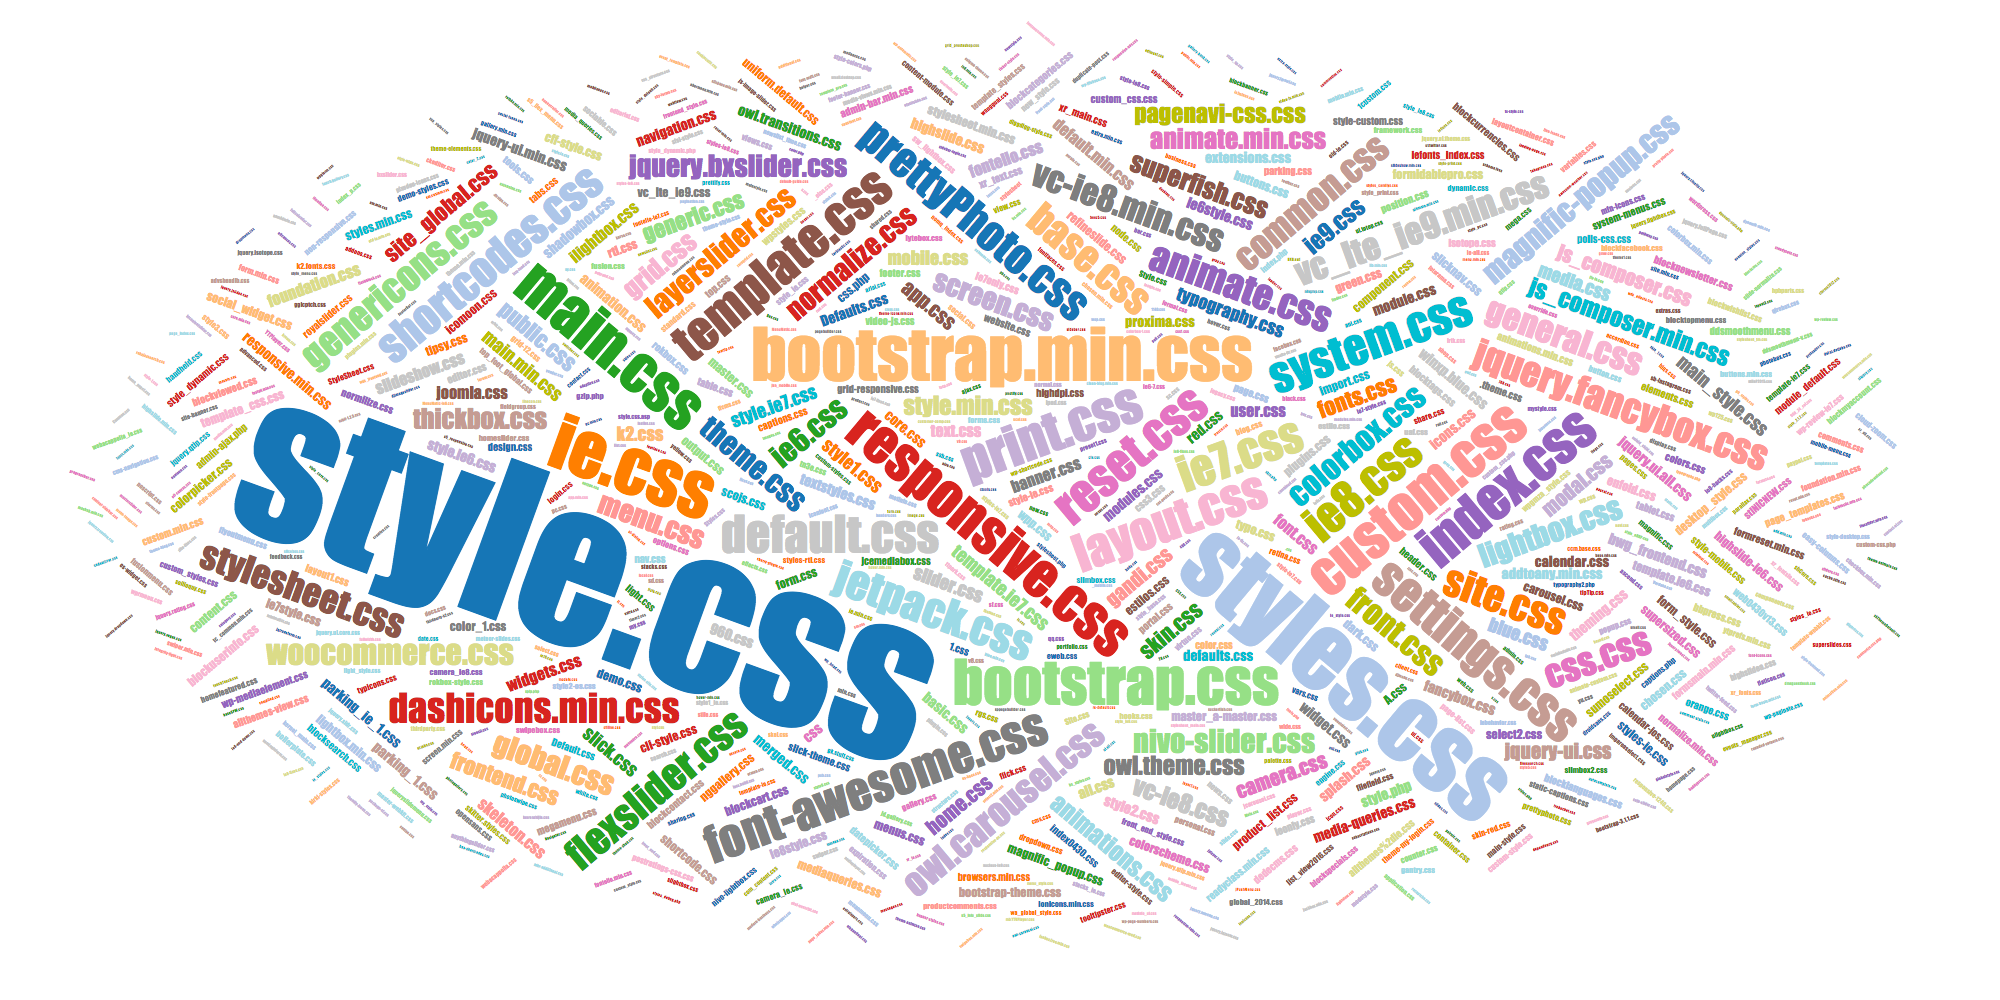 Popular names of CSS files z1g58KEIHdA.css, zBFhLdHDpnf.css, etc.